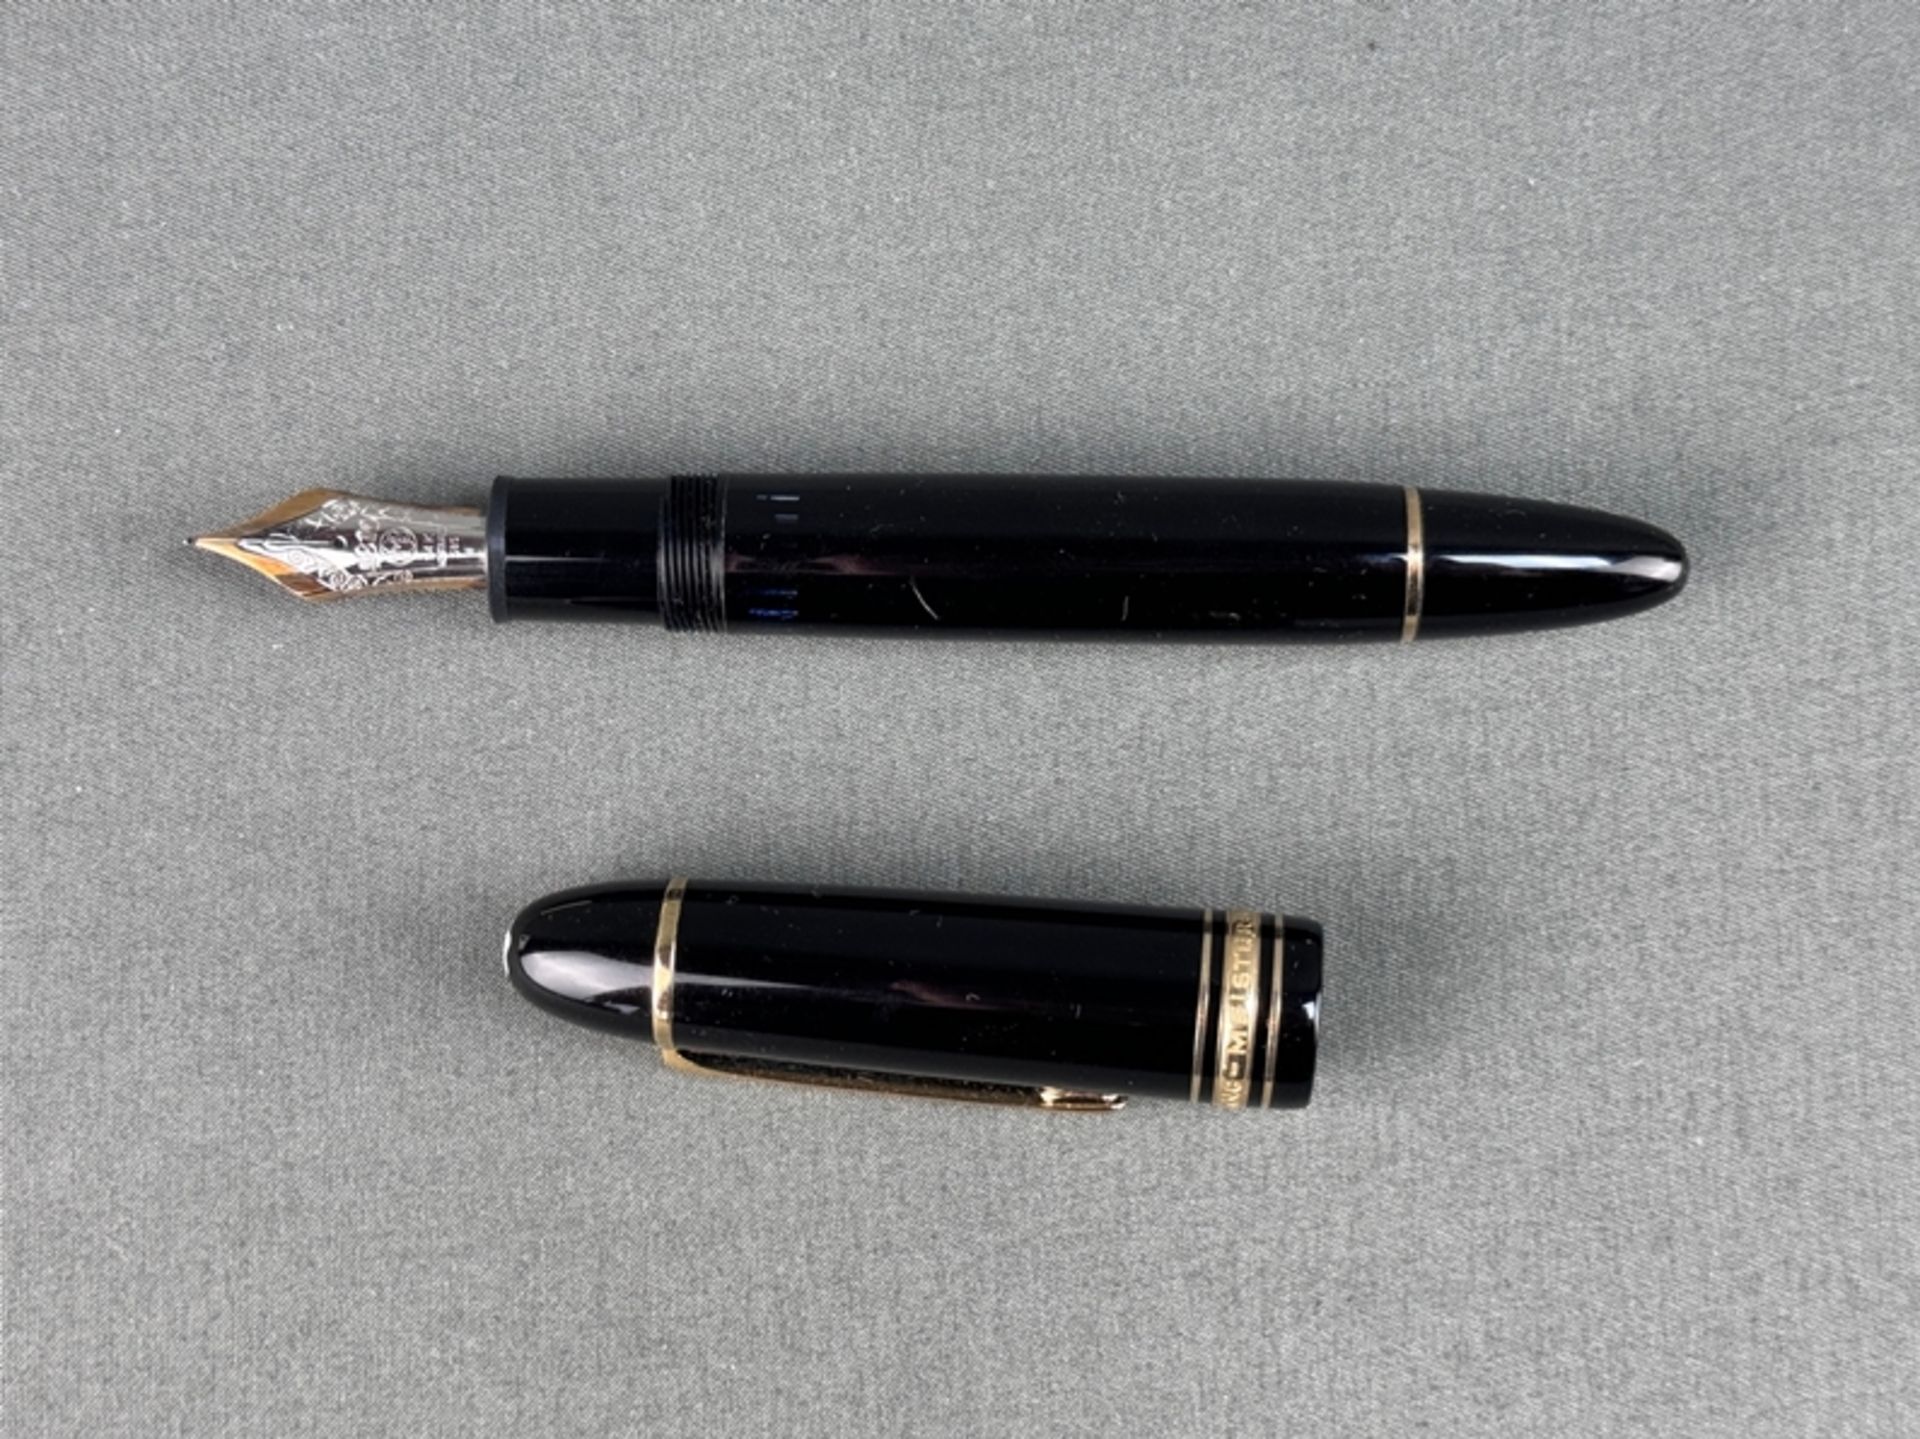 Montblanc fountain pen, Meisterstück No 149, 585/14K gold nib, barrel made of black precious resin - Image 2 of 3